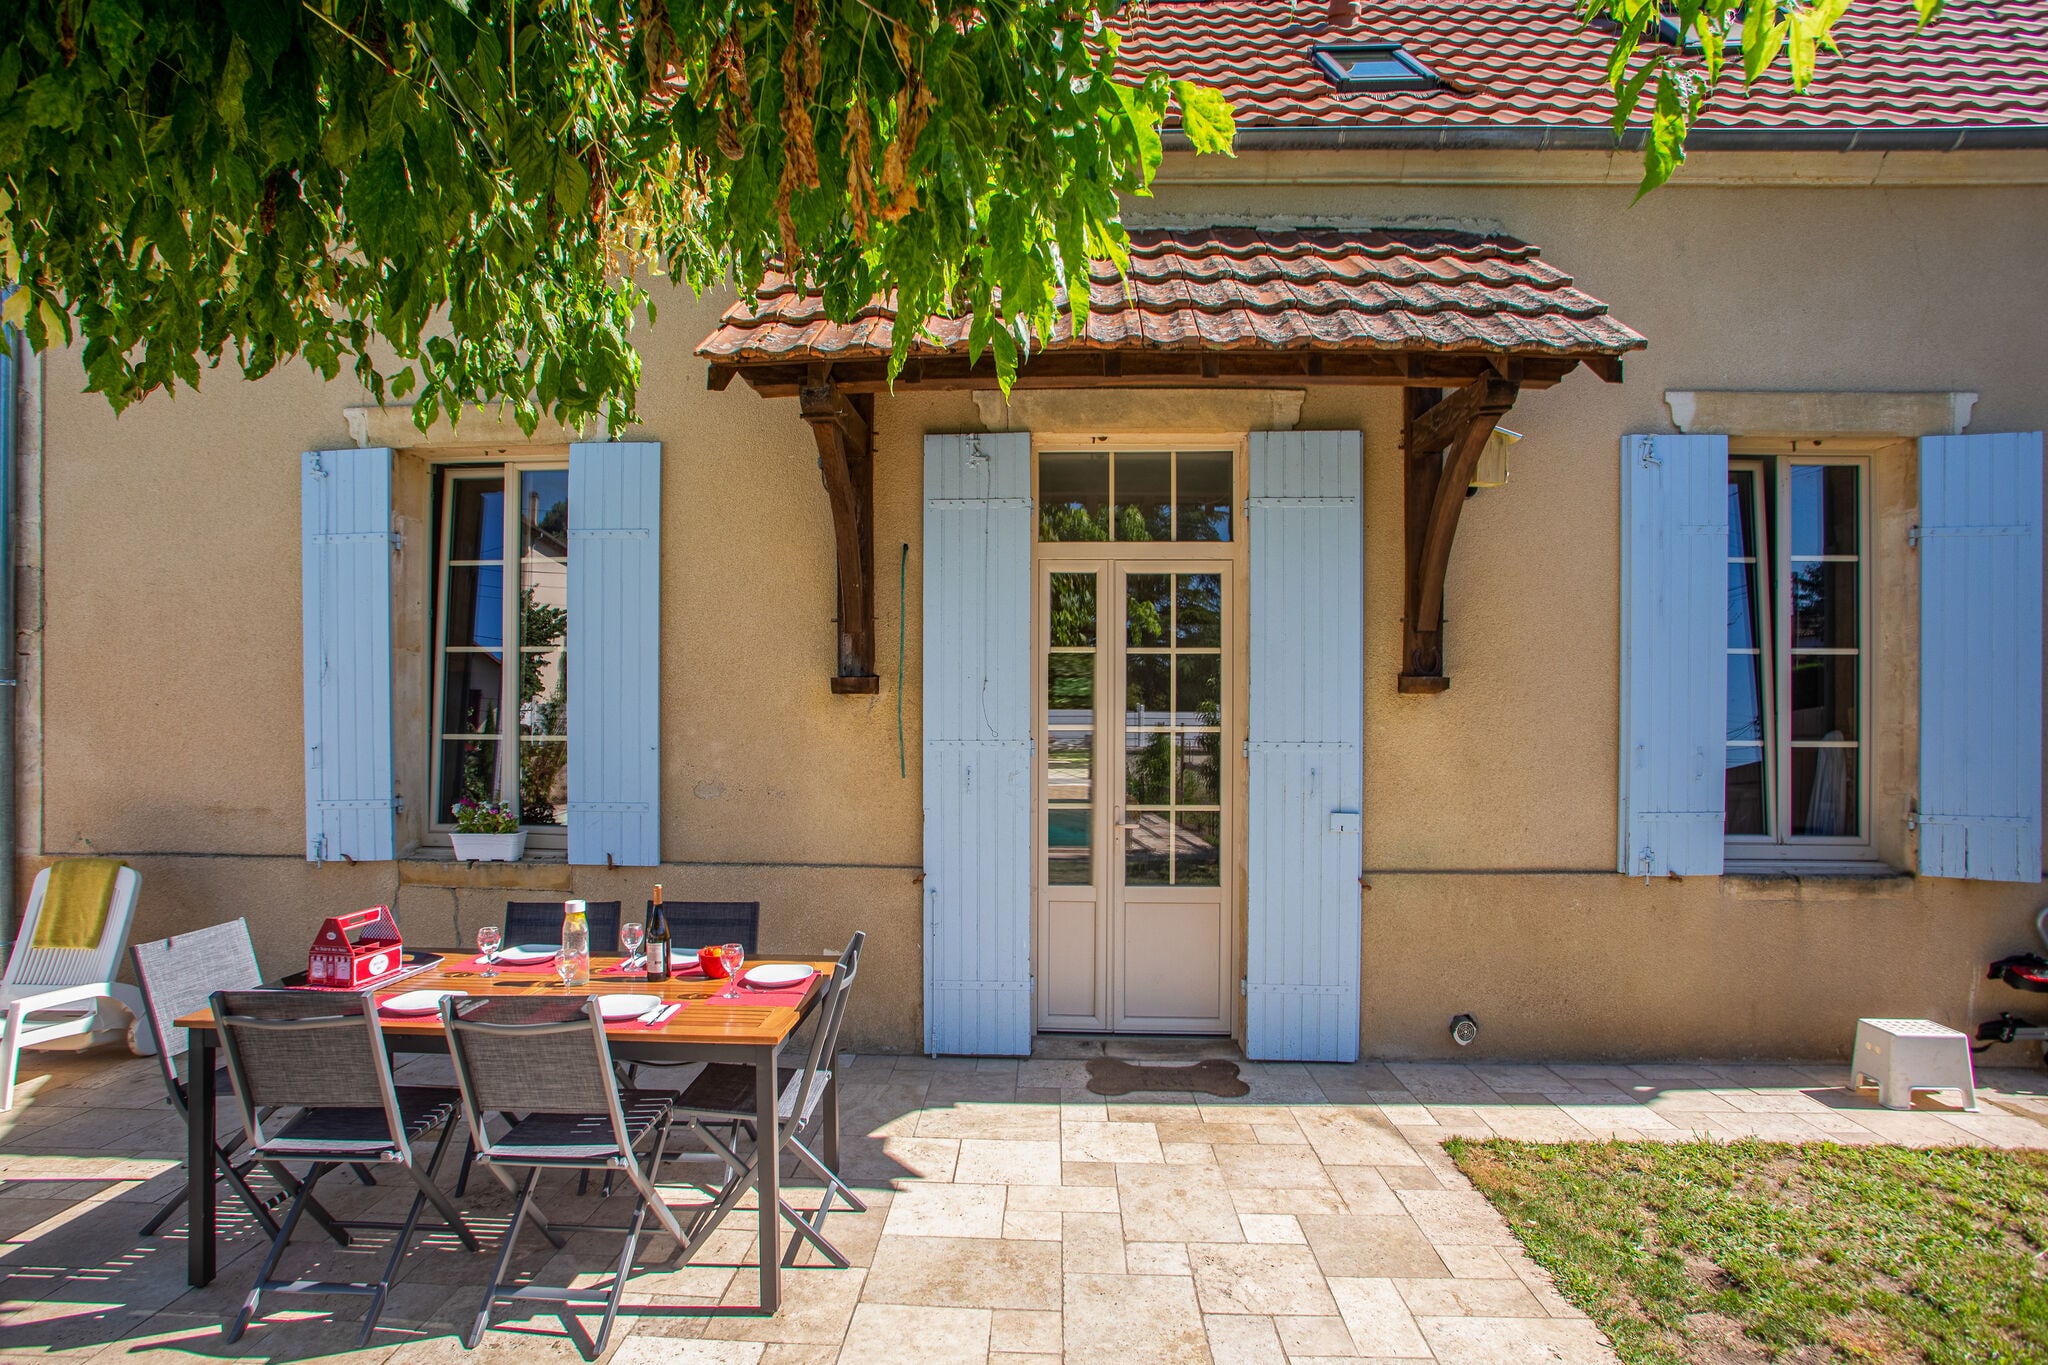 Maison de vacances spacieuse à Bergerac avec piscine privée